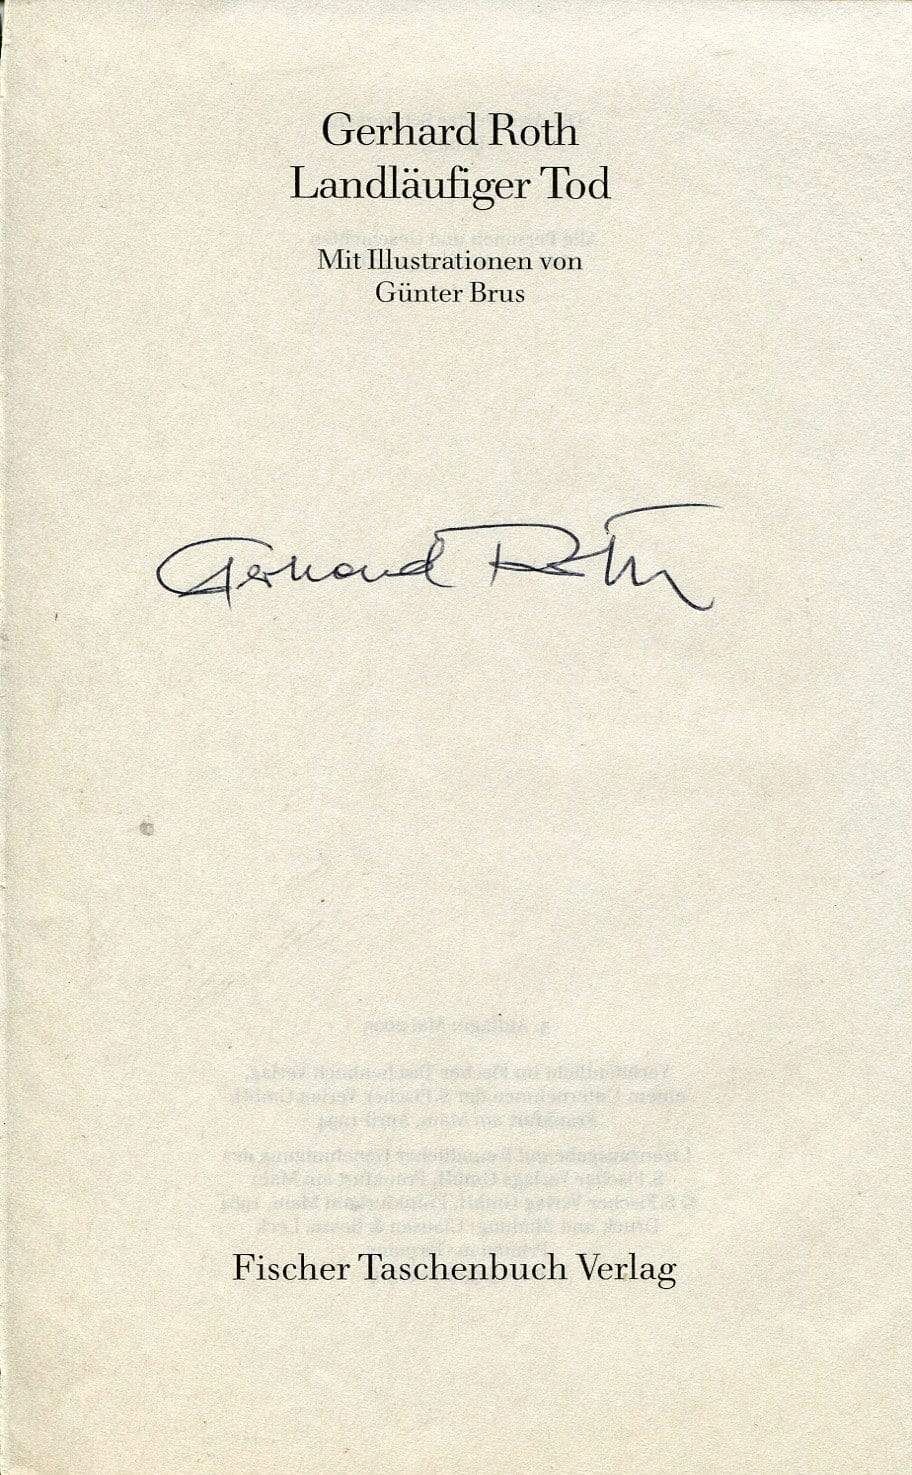 Roth, Gerhard autograph